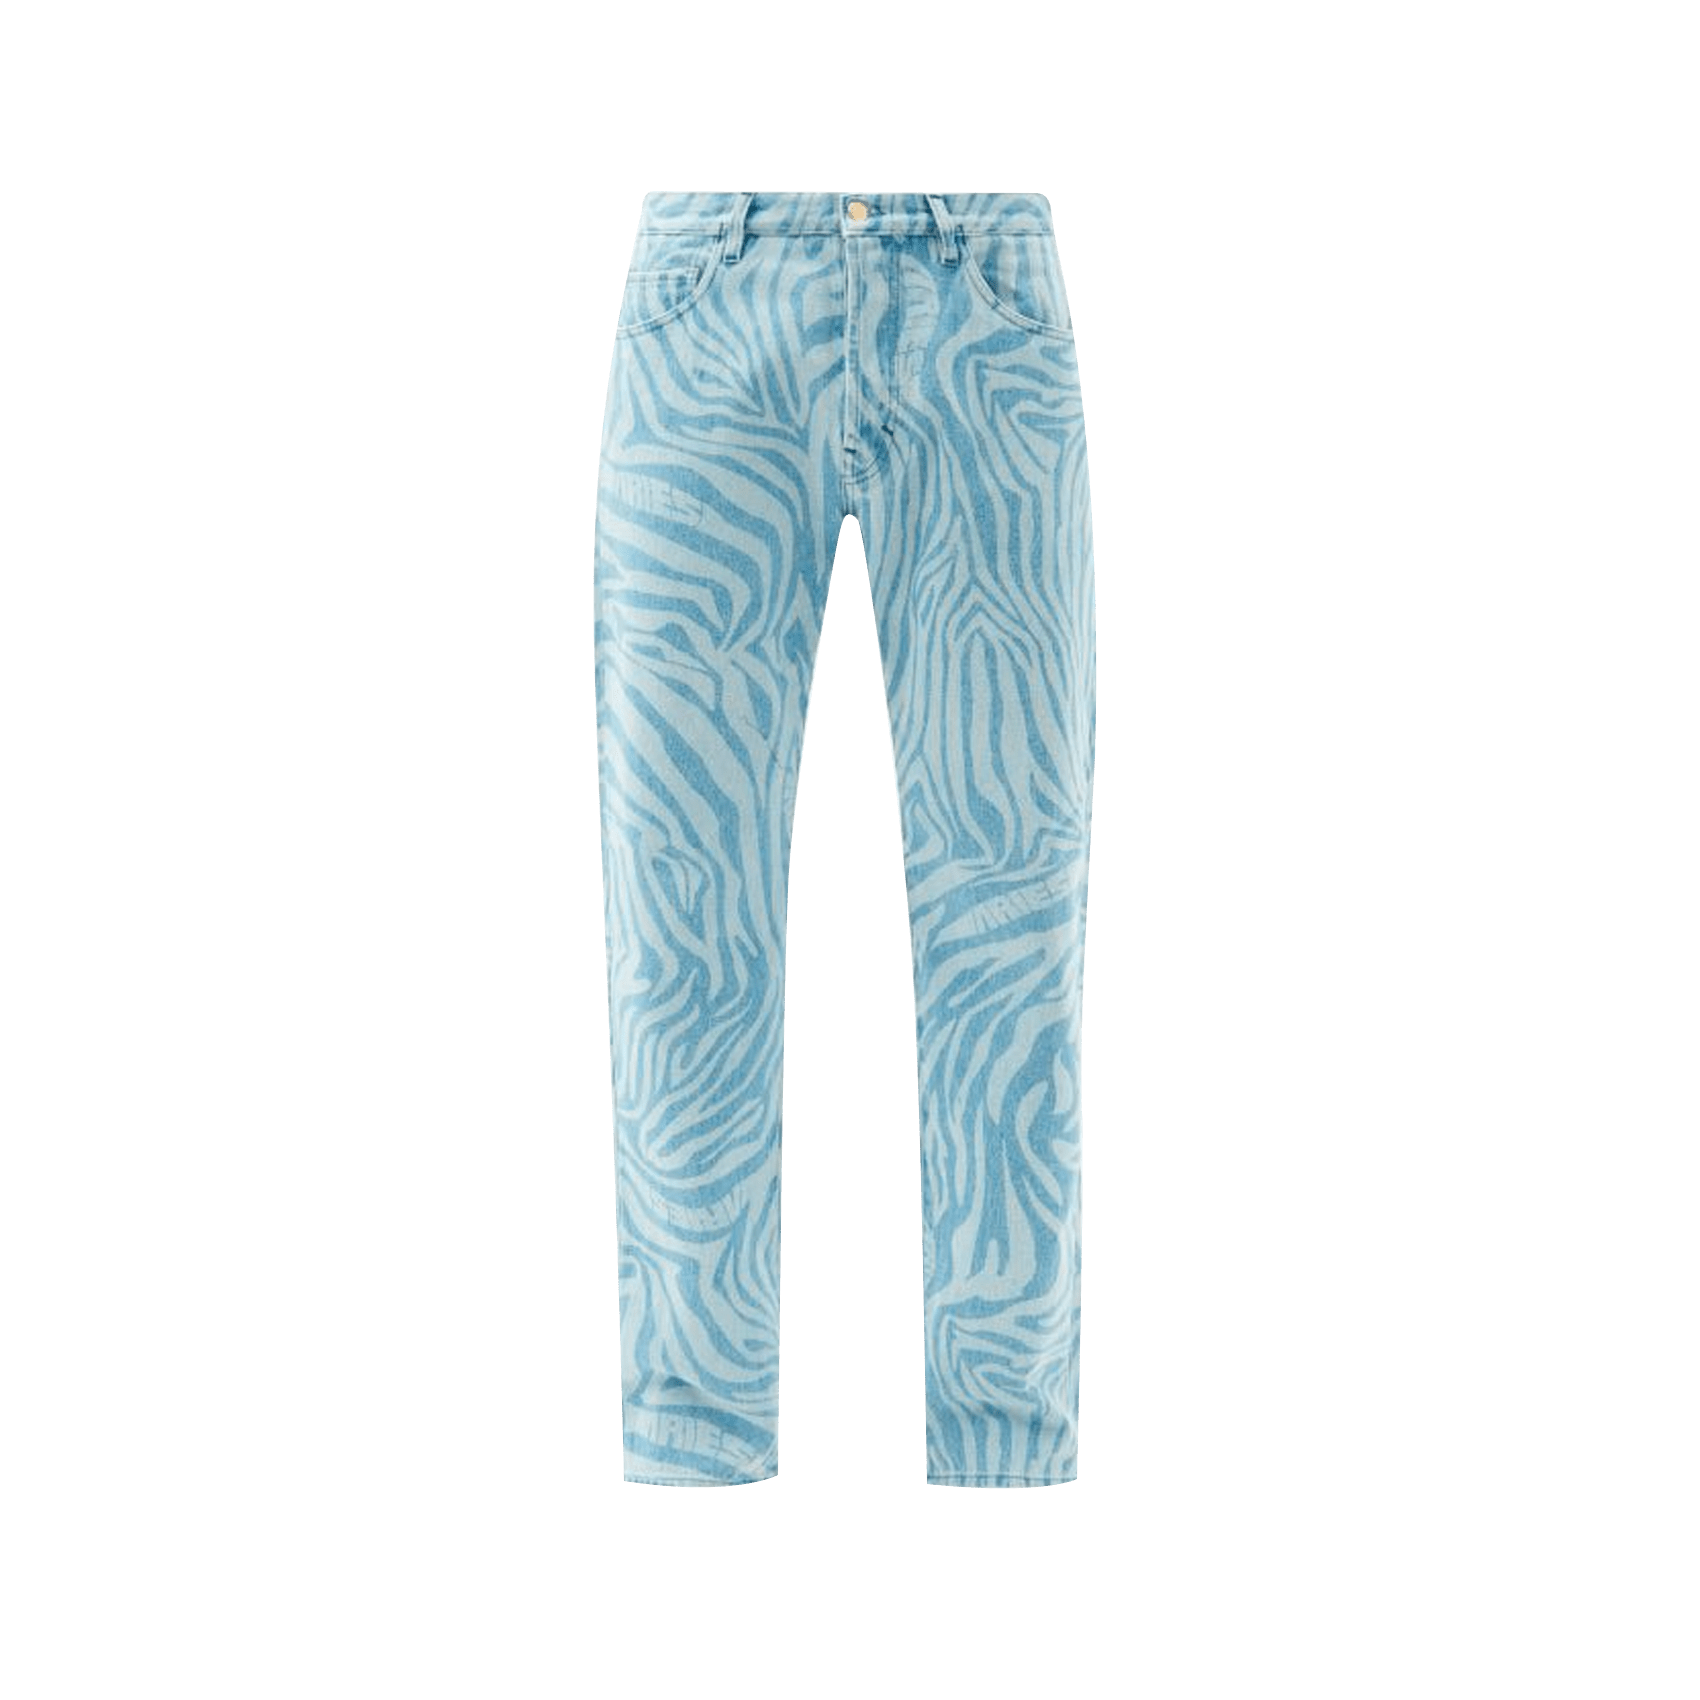 Zebra Print Lilly Jeans - Blue.